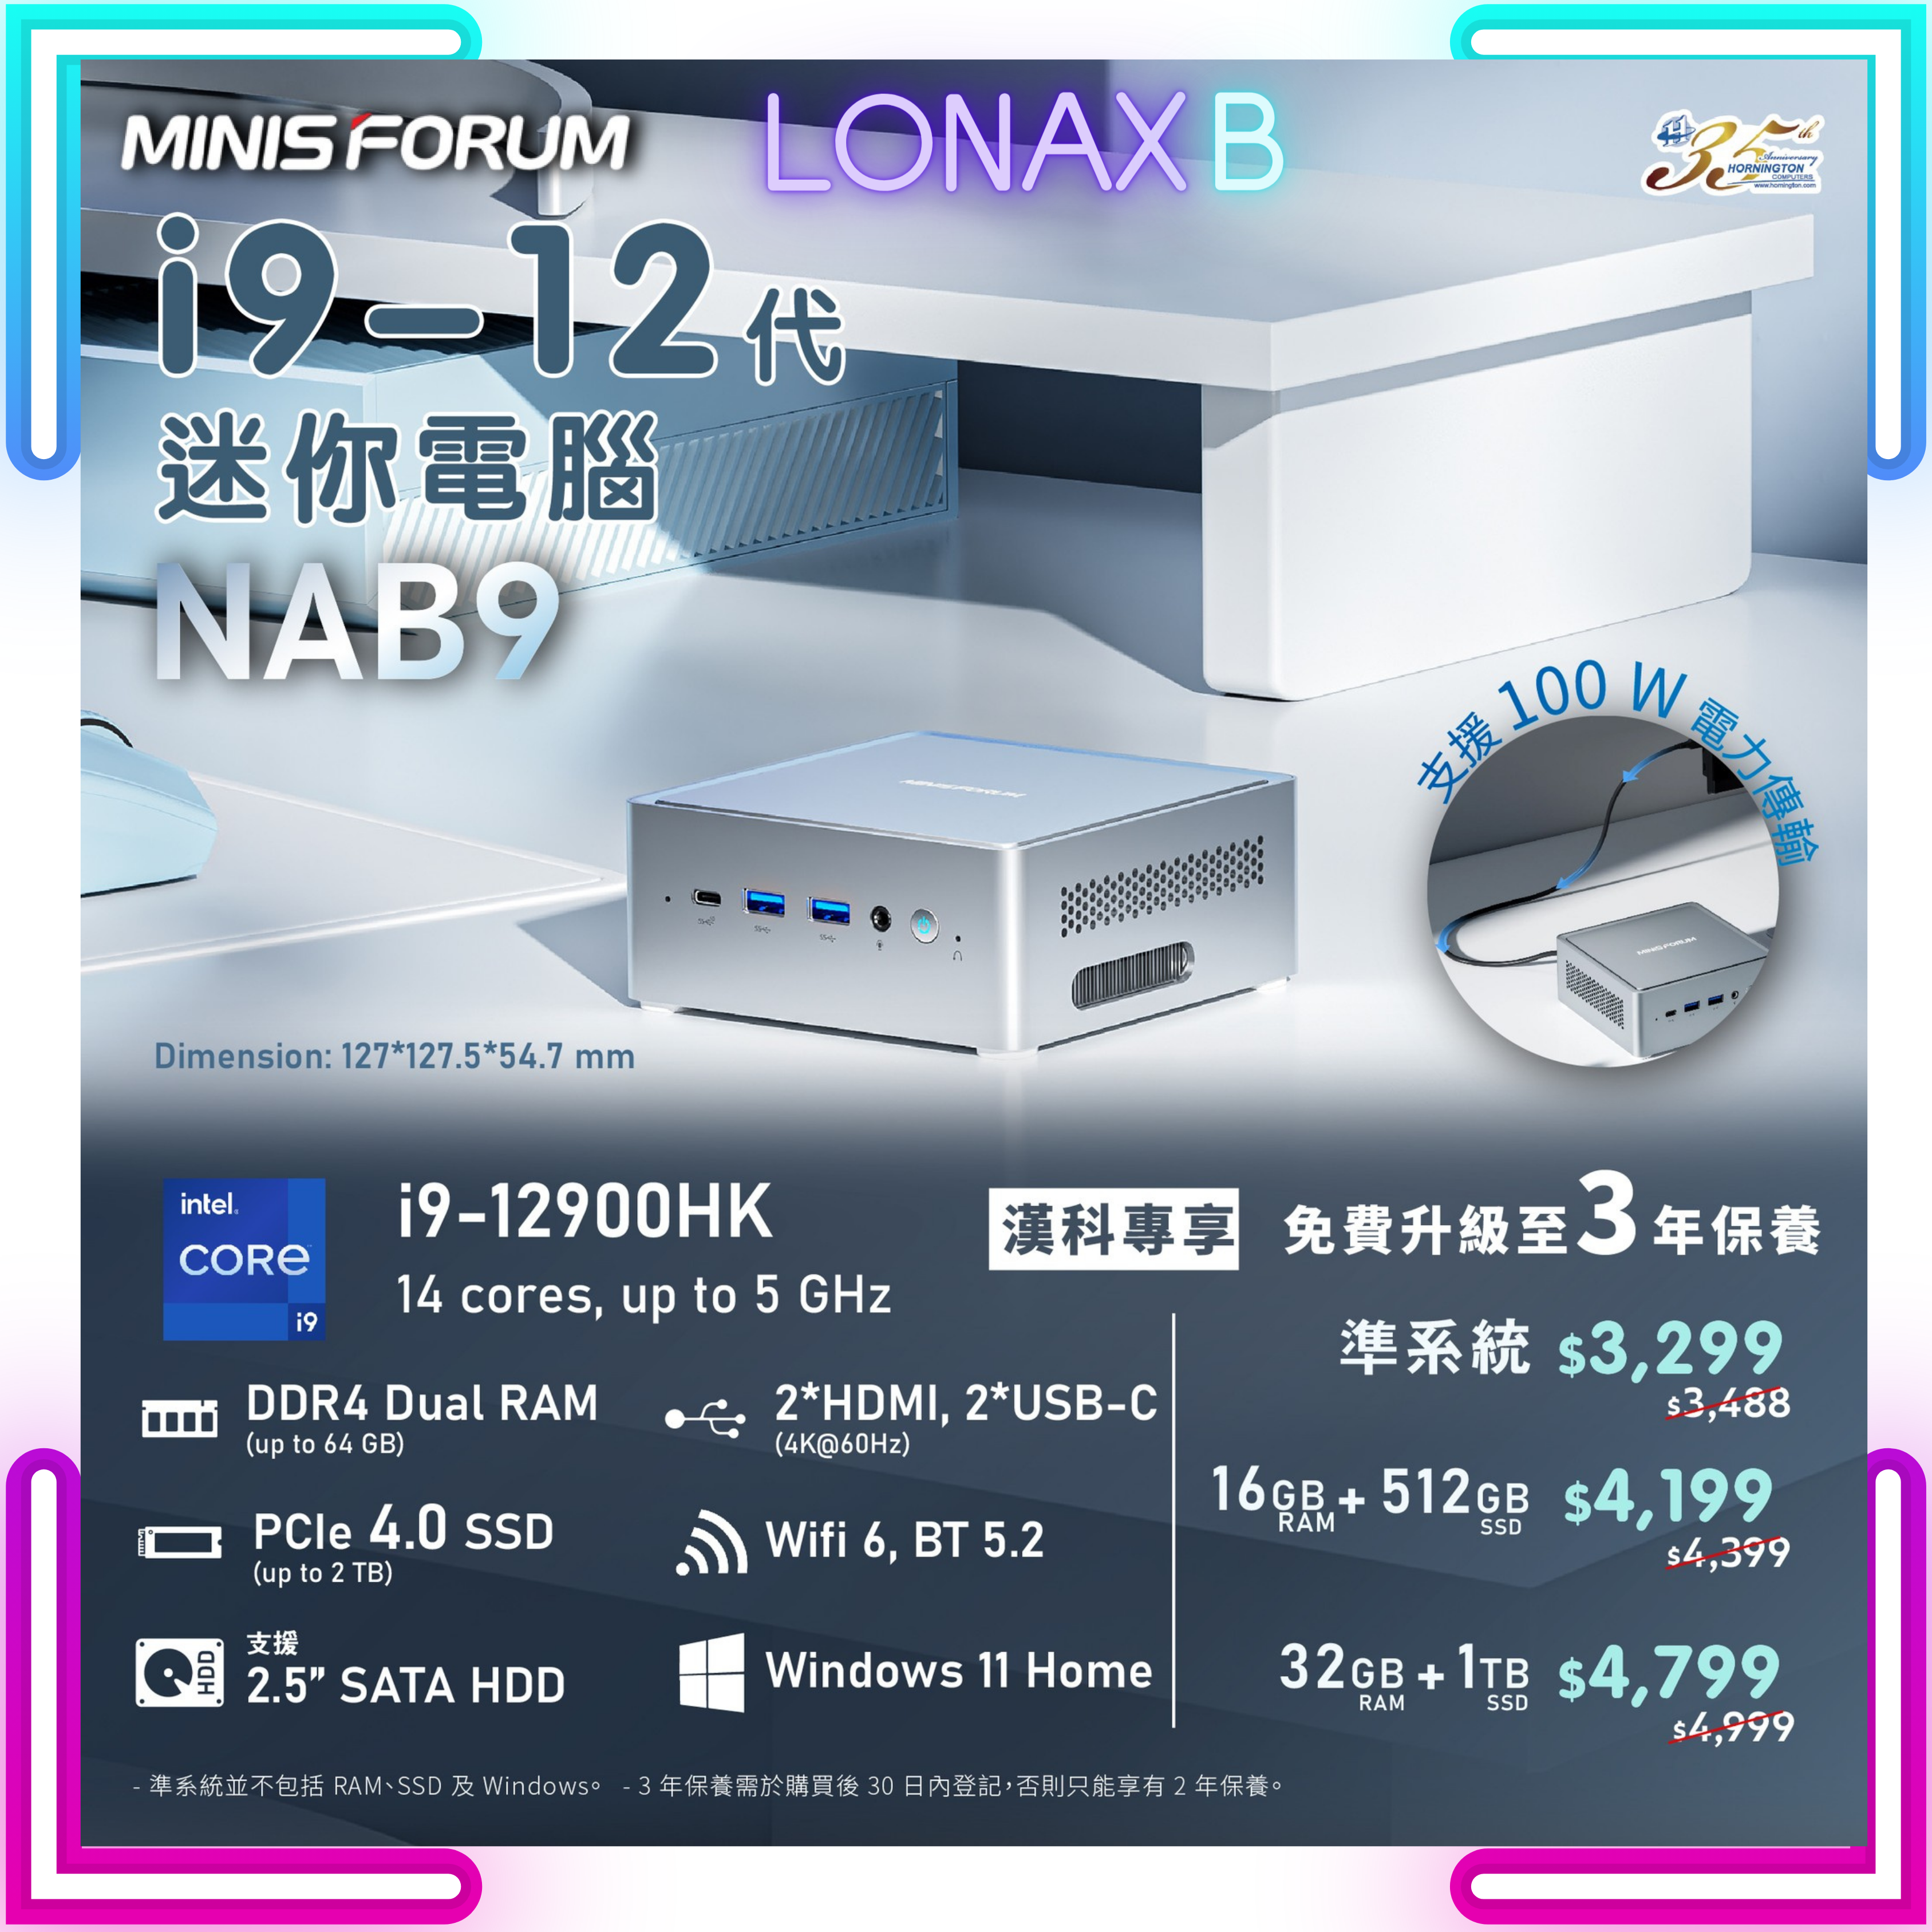 Minisforum NAB9 Mini PC mini computer (i9-12900HK, 16GB DDR4 RAM, 512GB SSD, Windows 11 Home) free upgrade to 3-year warranty 